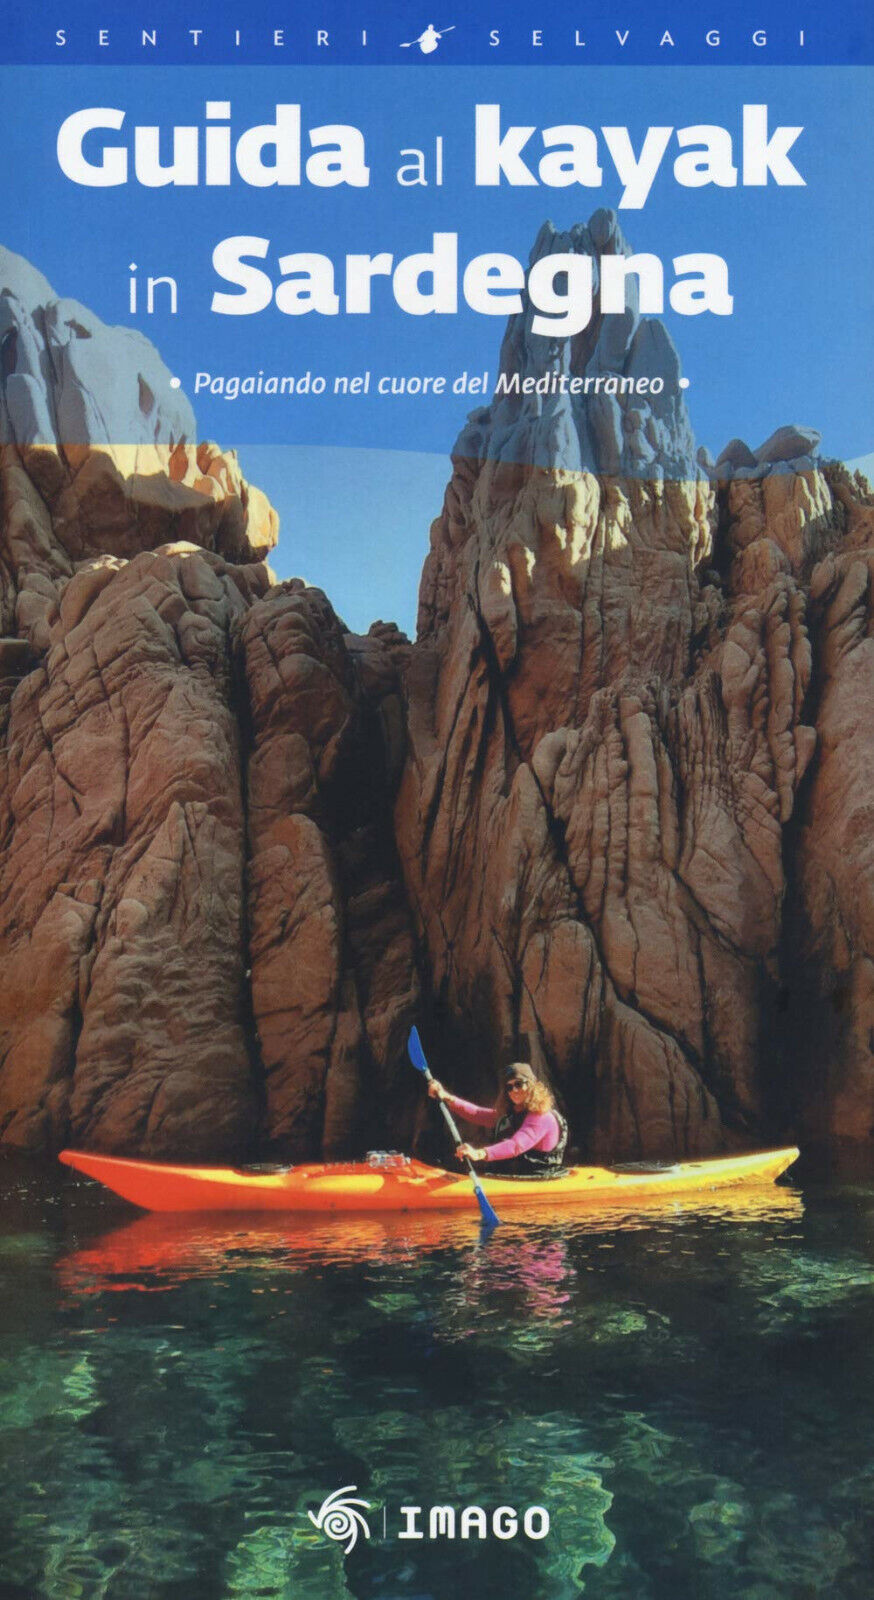 Guida al kayak in Sardegna - Telemaco Murgia - Imago Multimedia, 2020